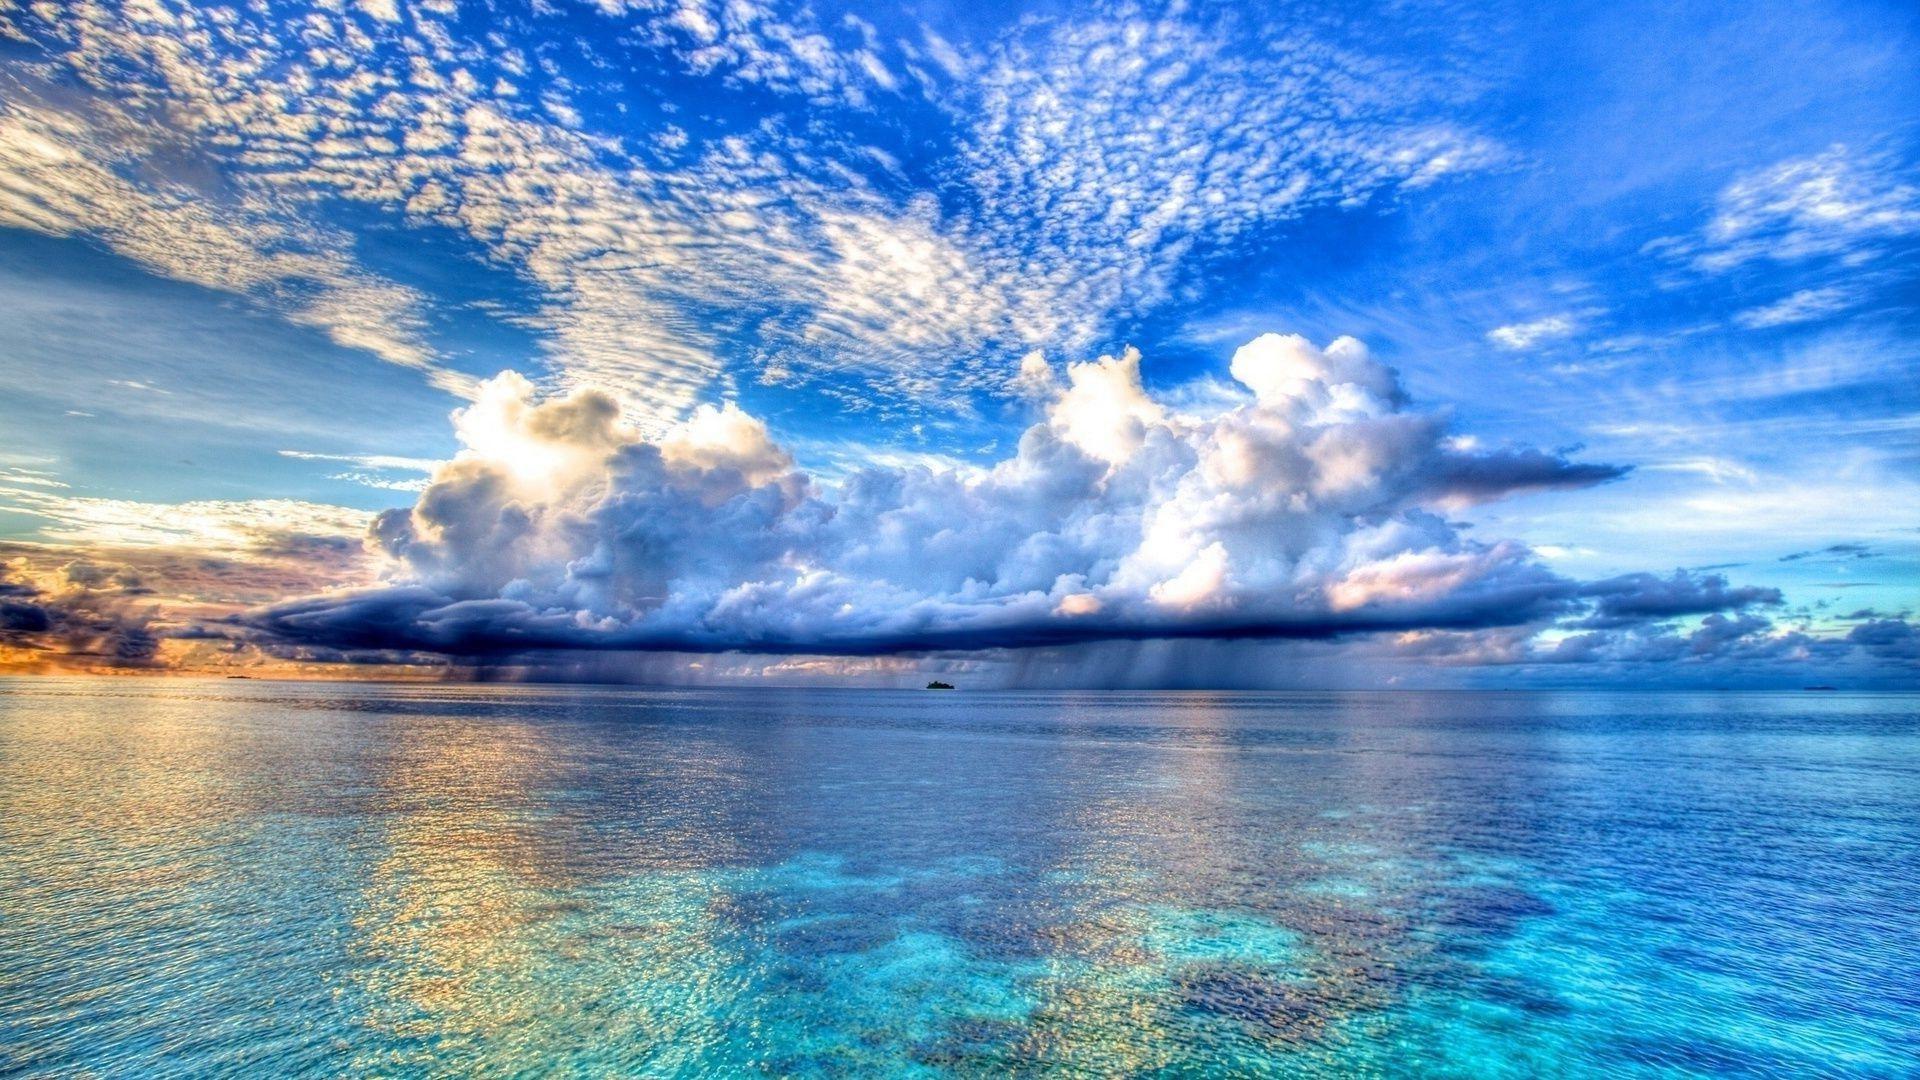 Blue ocean and amazing sky. Desktop wallpaper for free